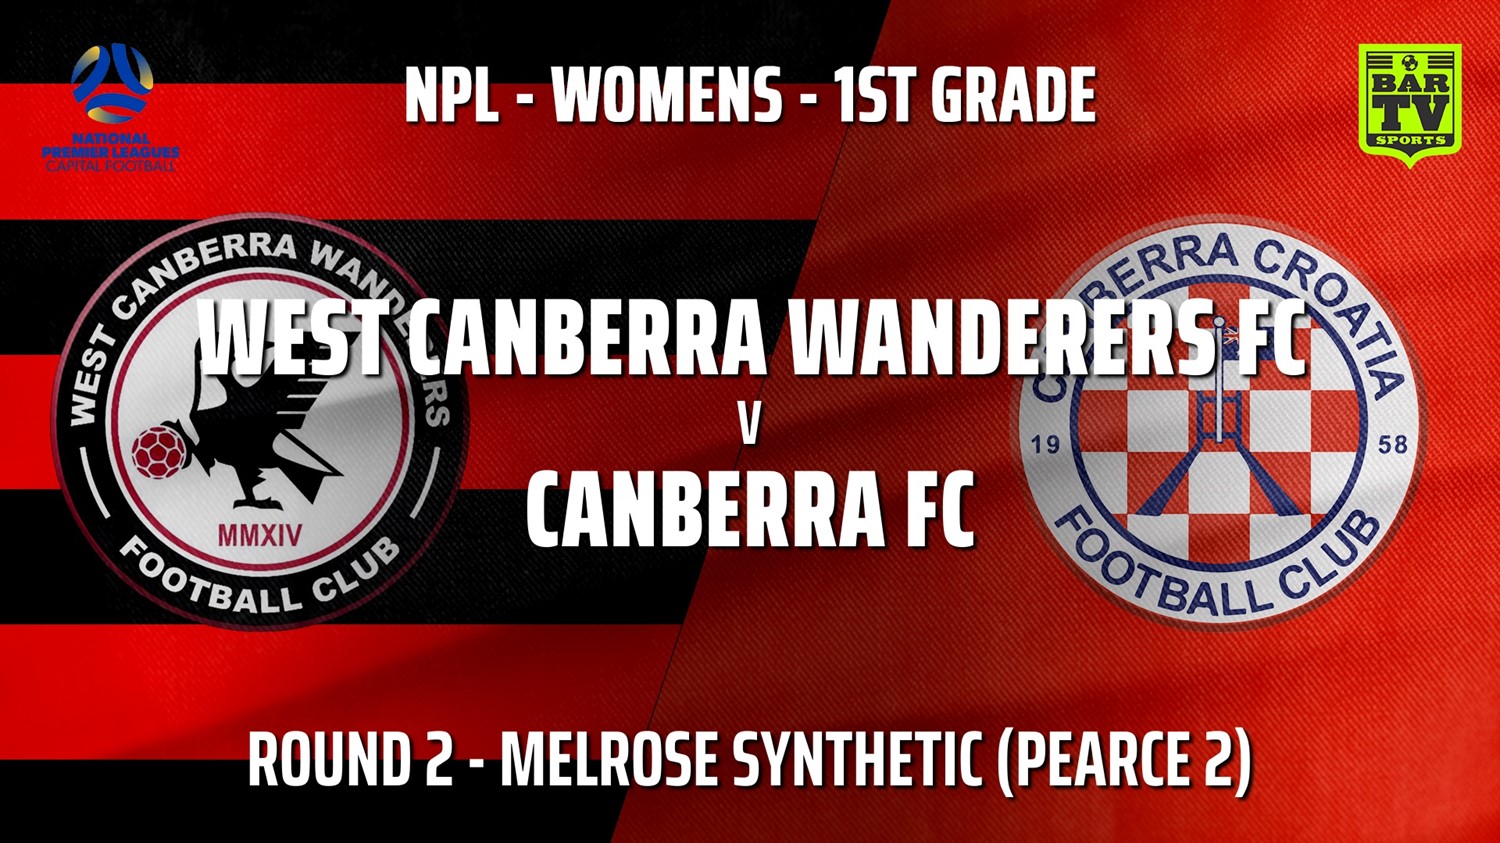 NPLW - Capital Round 2 - West Canberra Wanderers FC (women) v Canberra FC (women) Slate Image